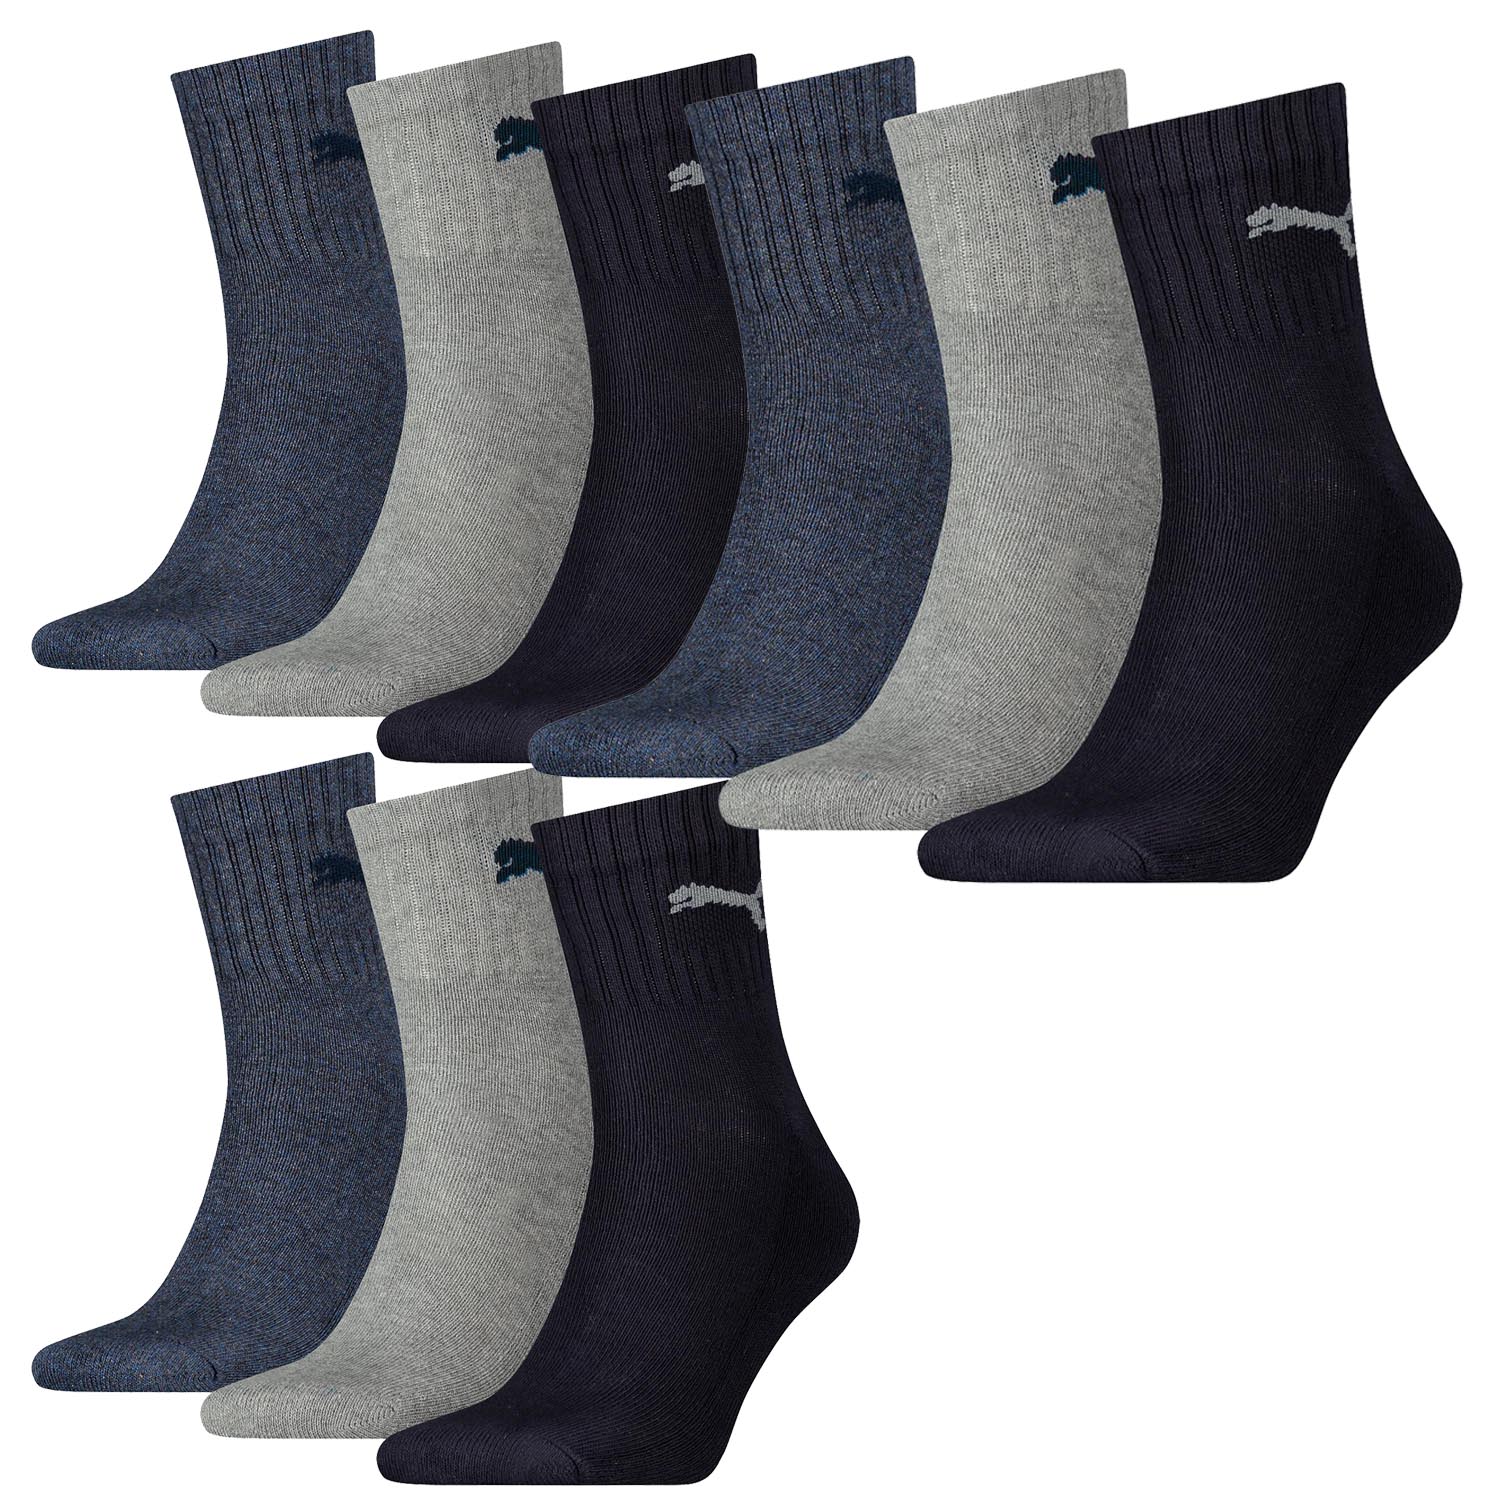 PUMA Herren SHORT CREW 3P UNISEX Socken, navy/Grey/Nightshadow blue, 43-46